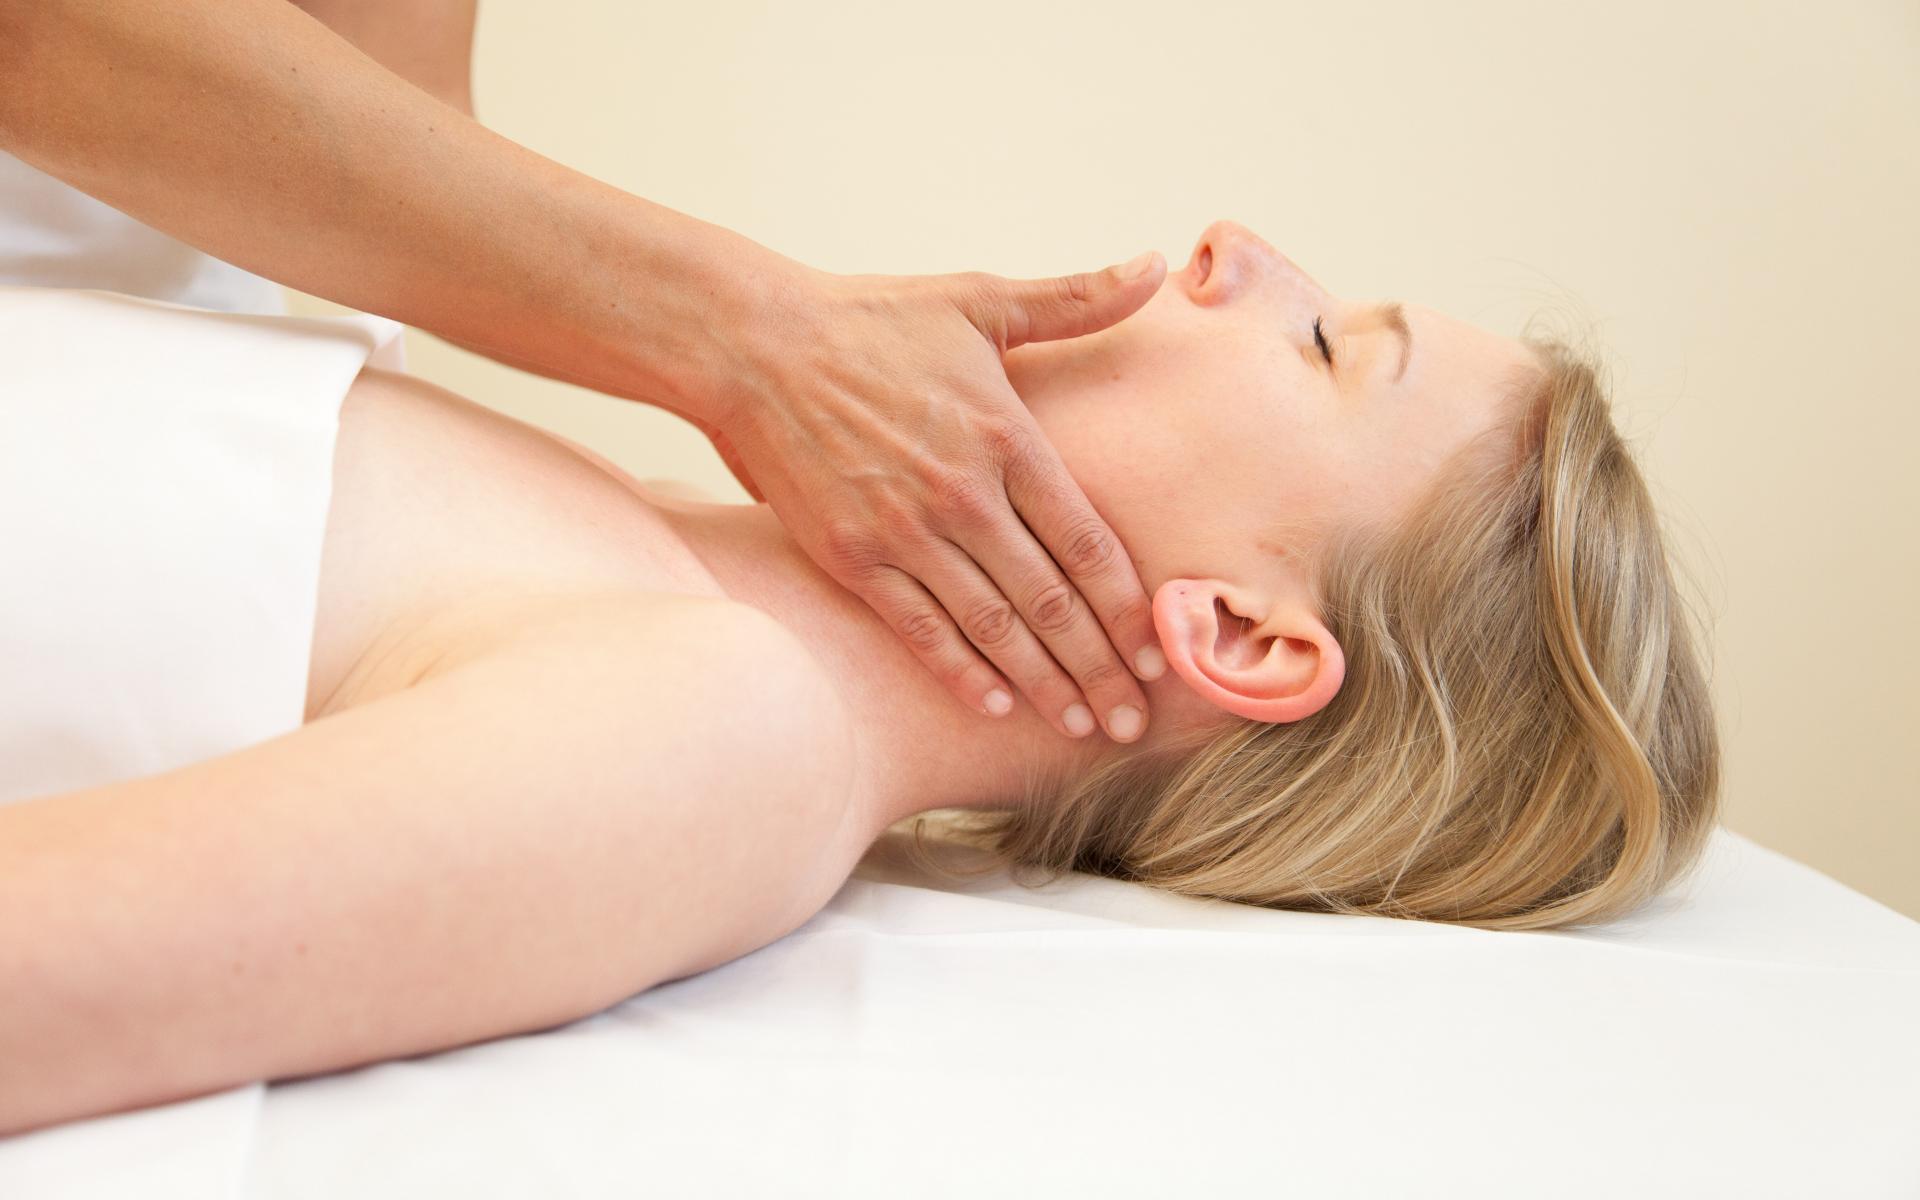 Hand Oberkörper Massage Lymphdrainage